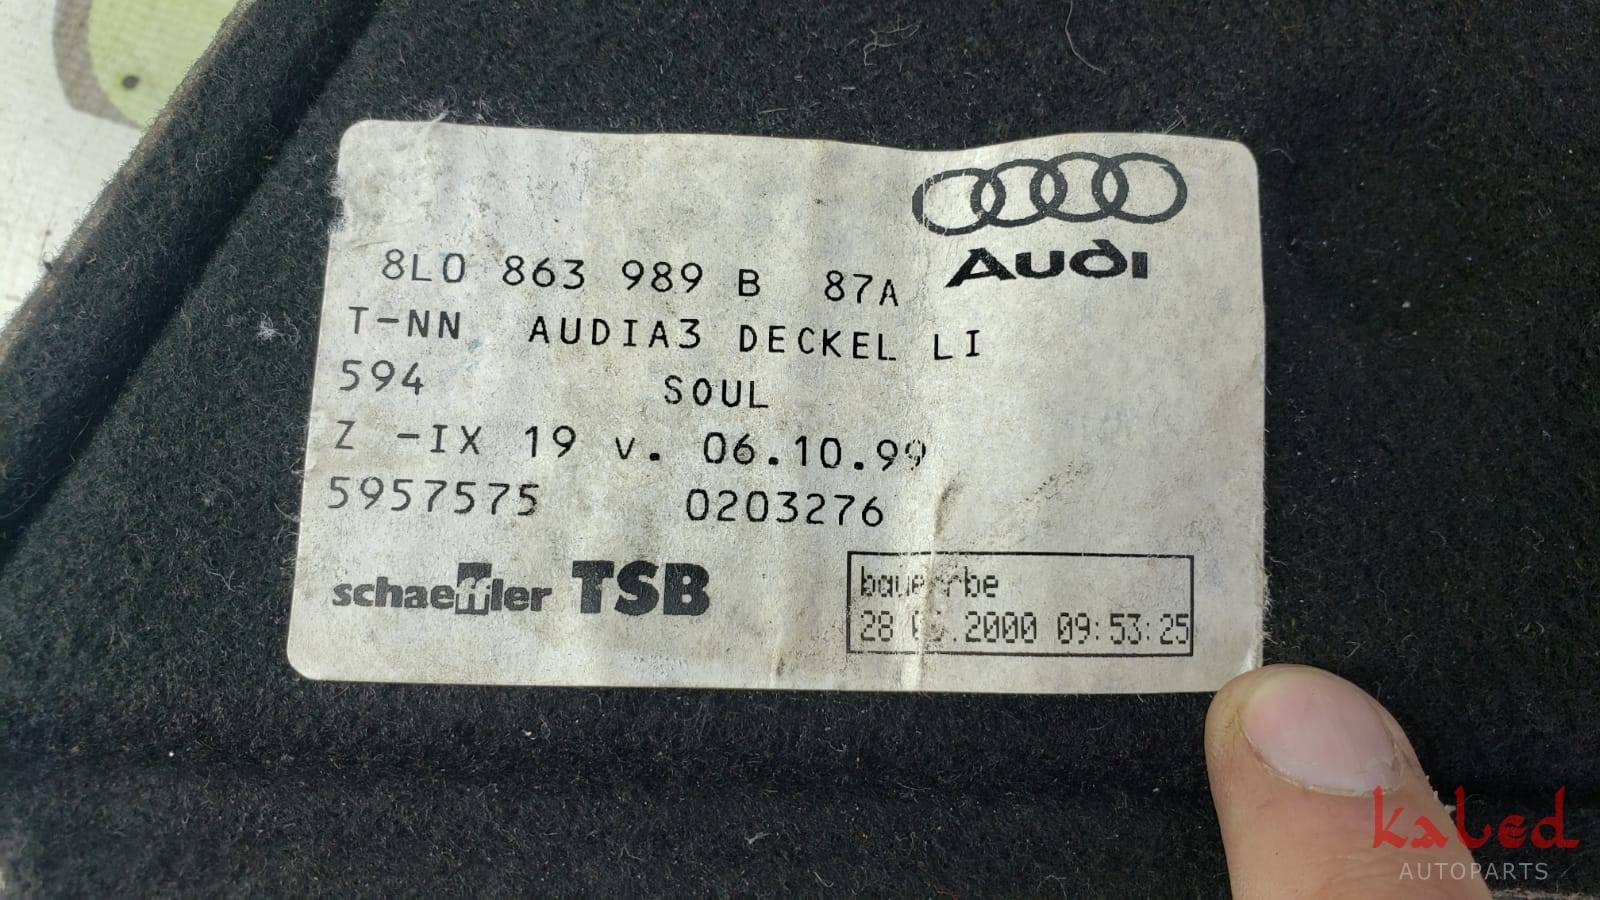 Tampa lateral porta malas Audi A3 2000 a 06 - Kaled Auto Parts